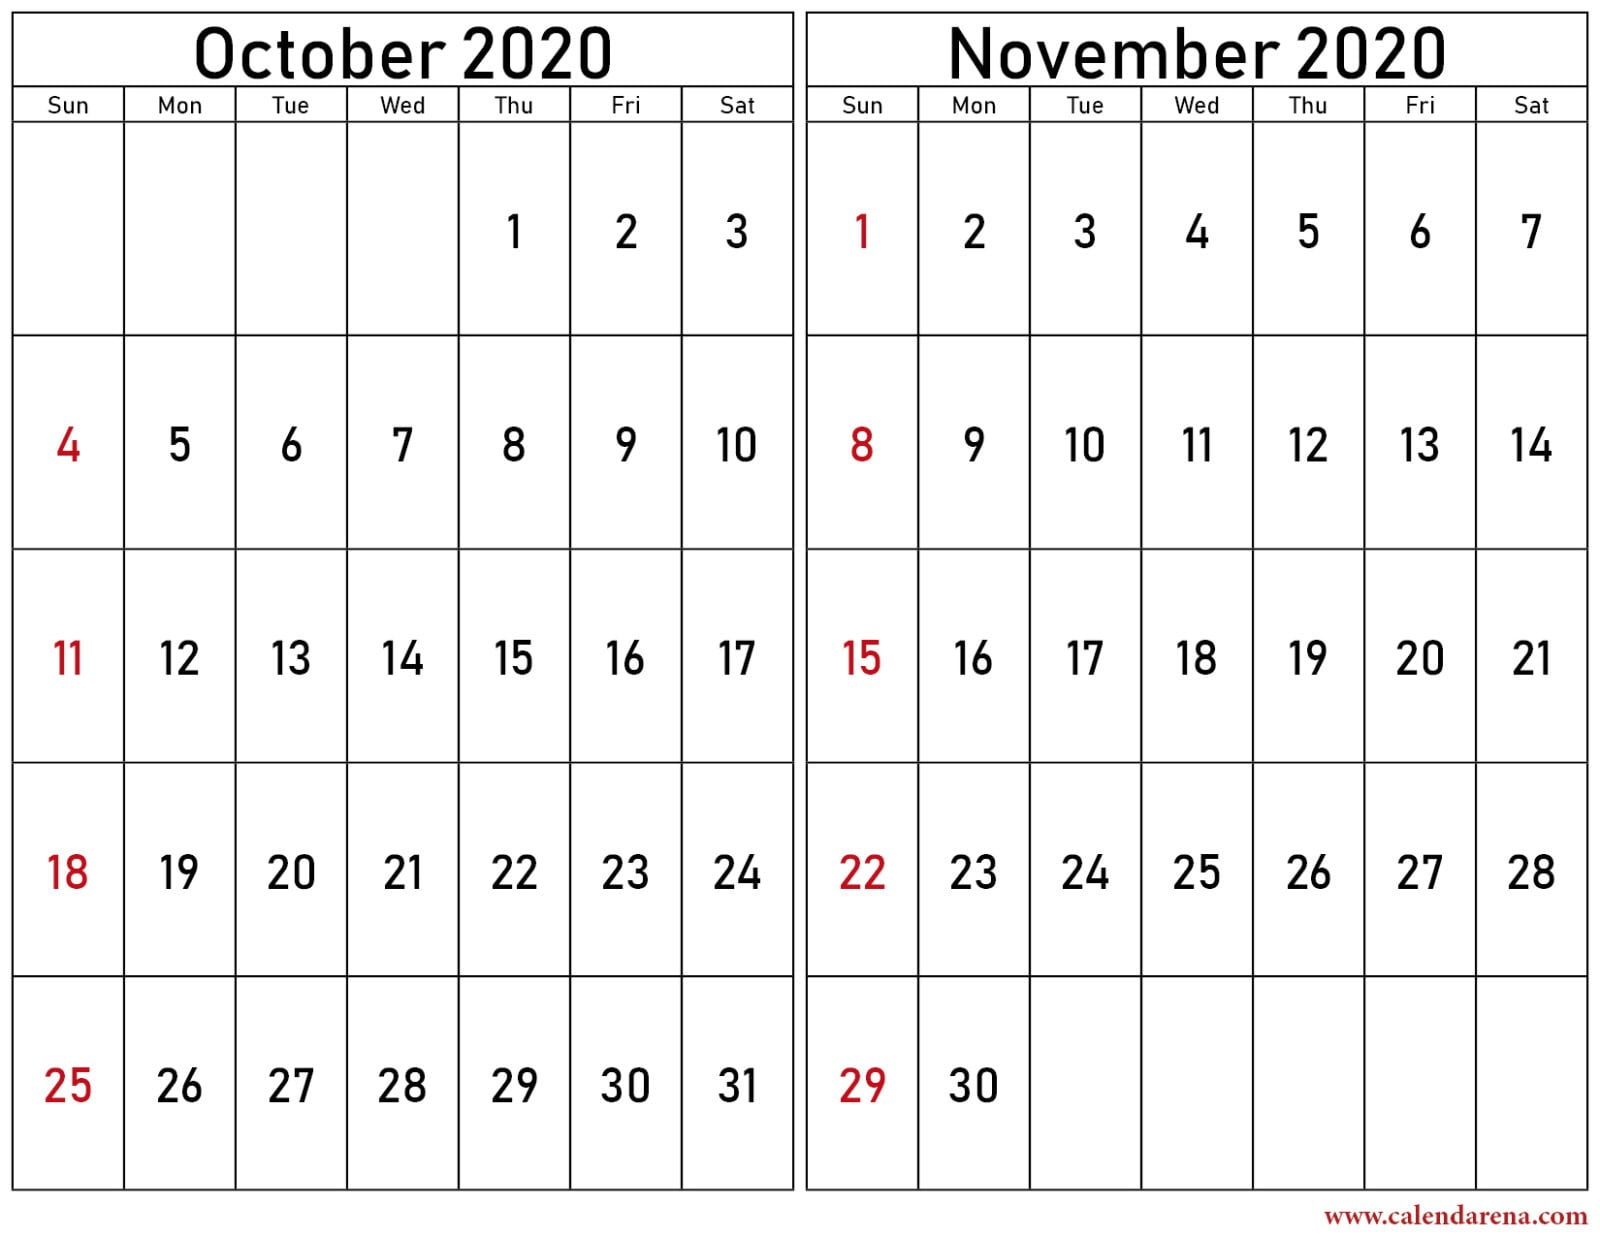 November 2020 Calendar Template Free PDF